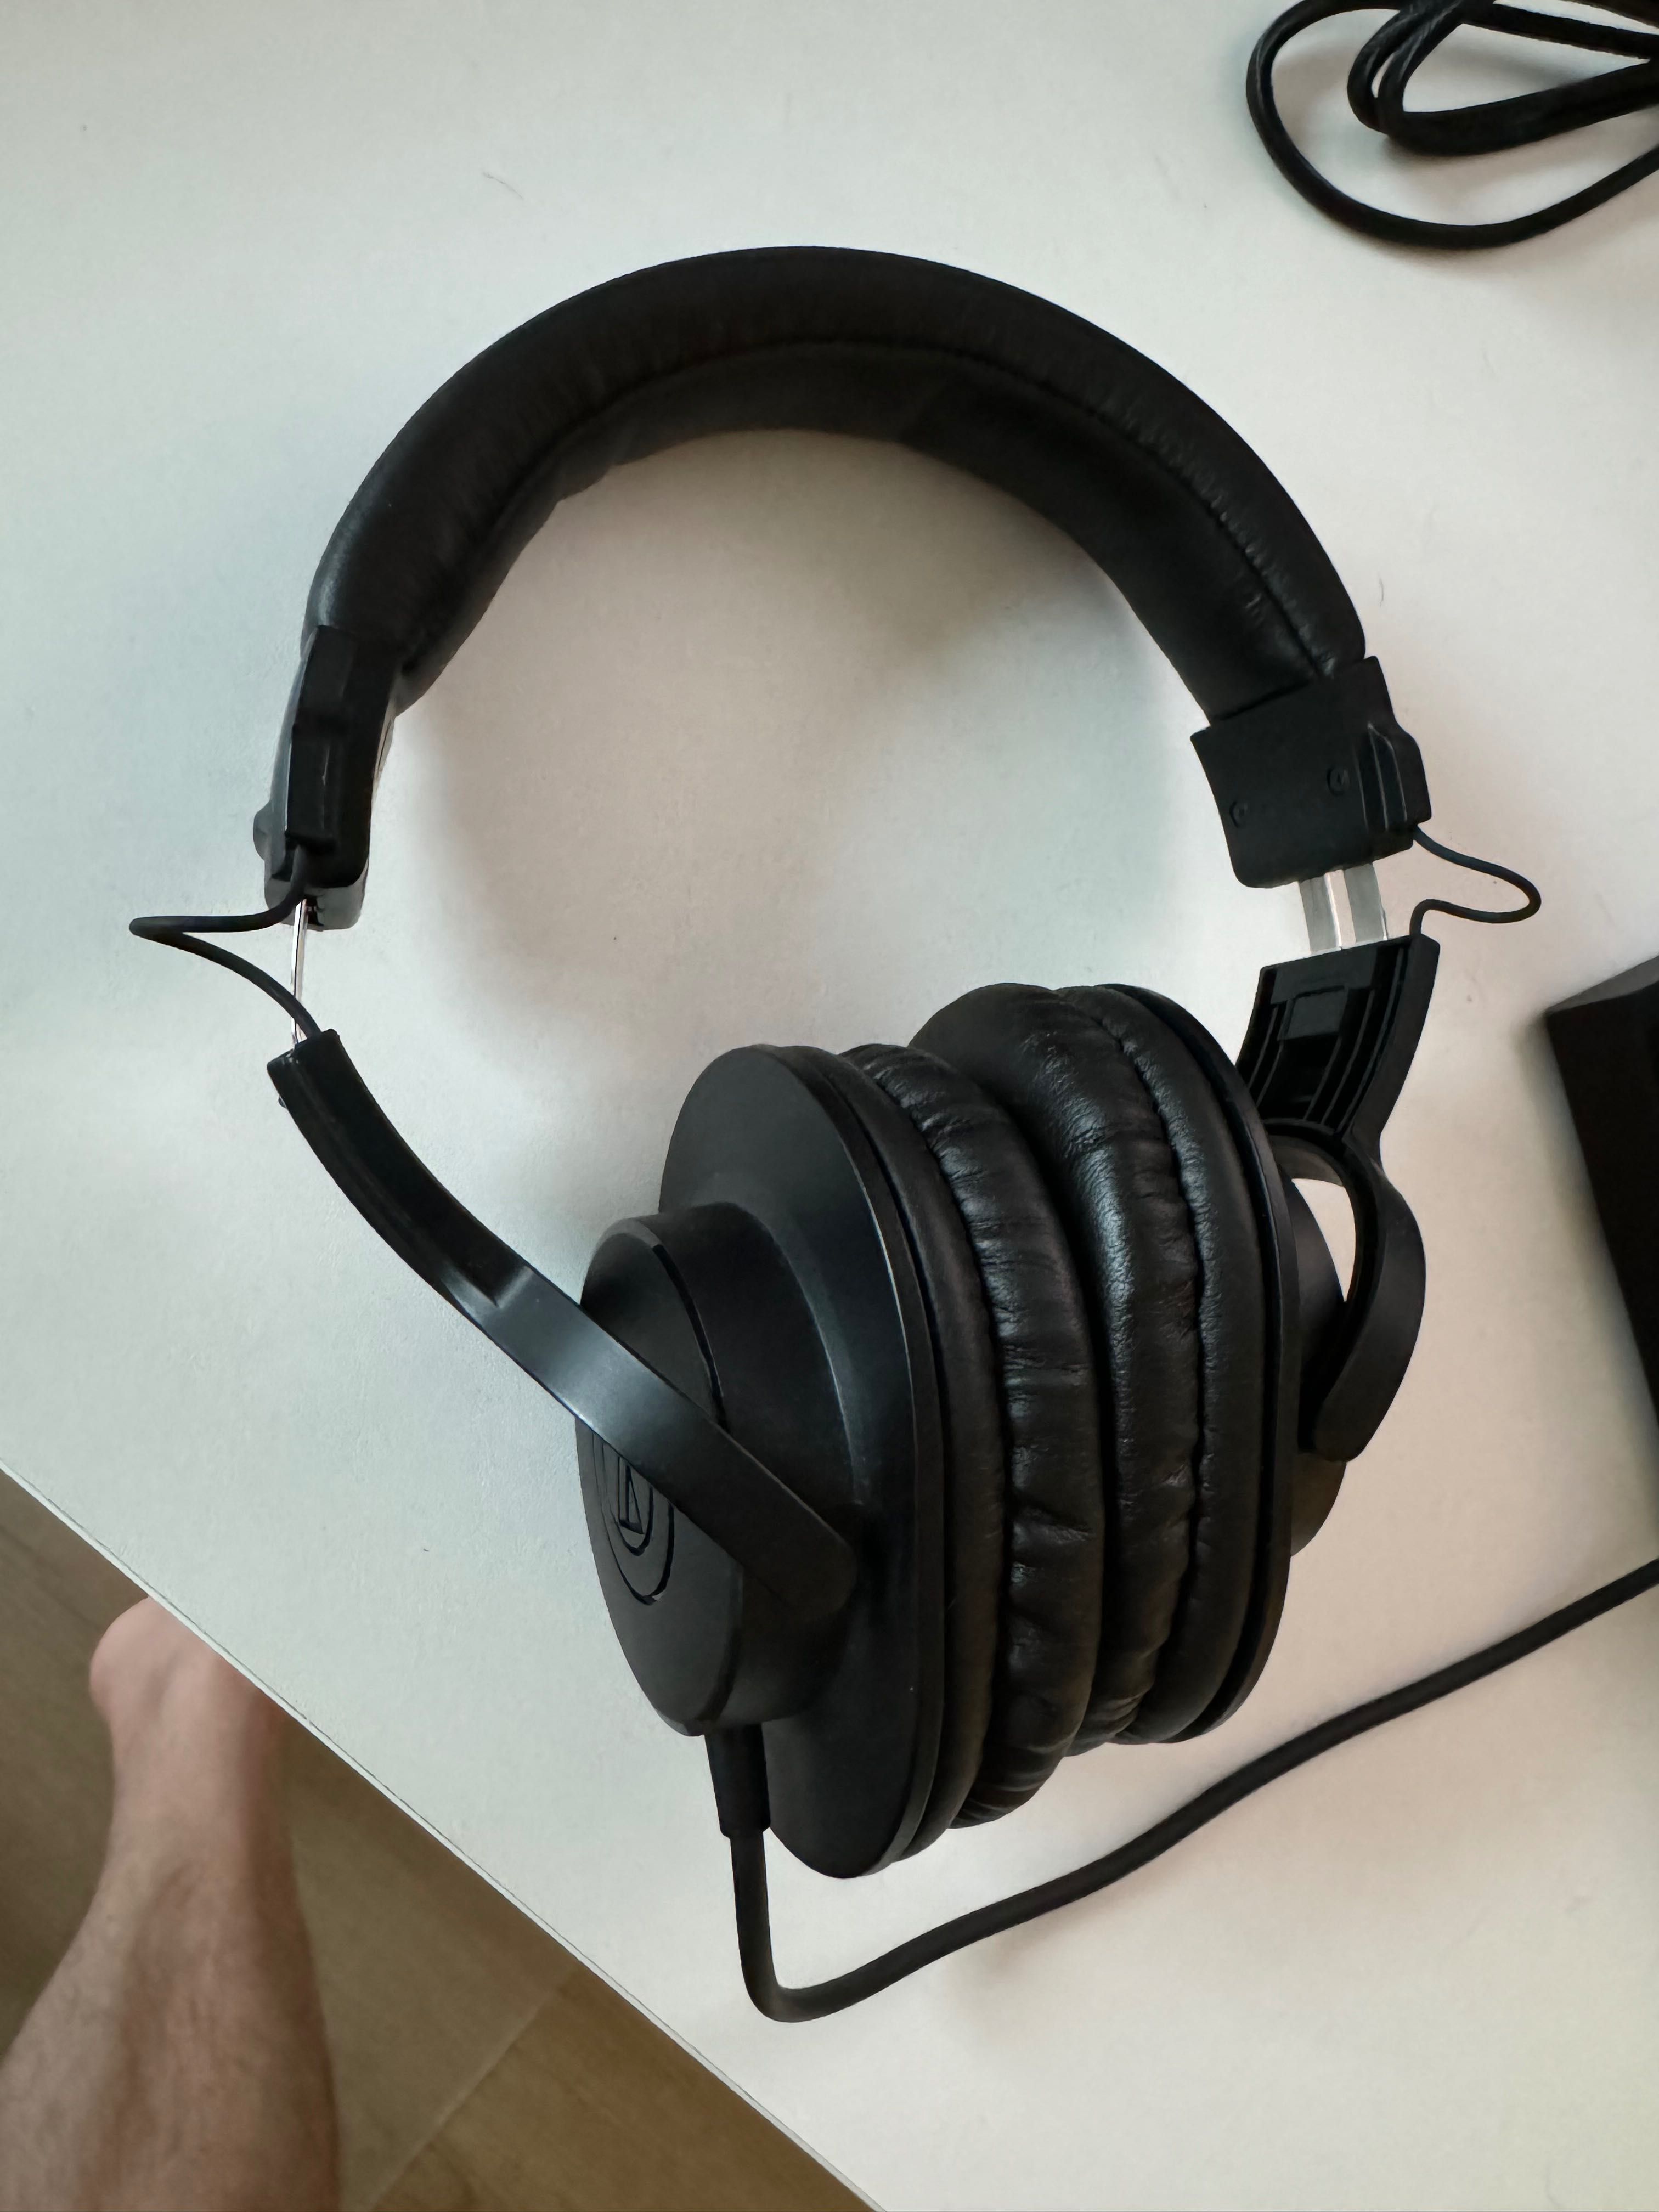 Headphone audio-technica ATH-M20x